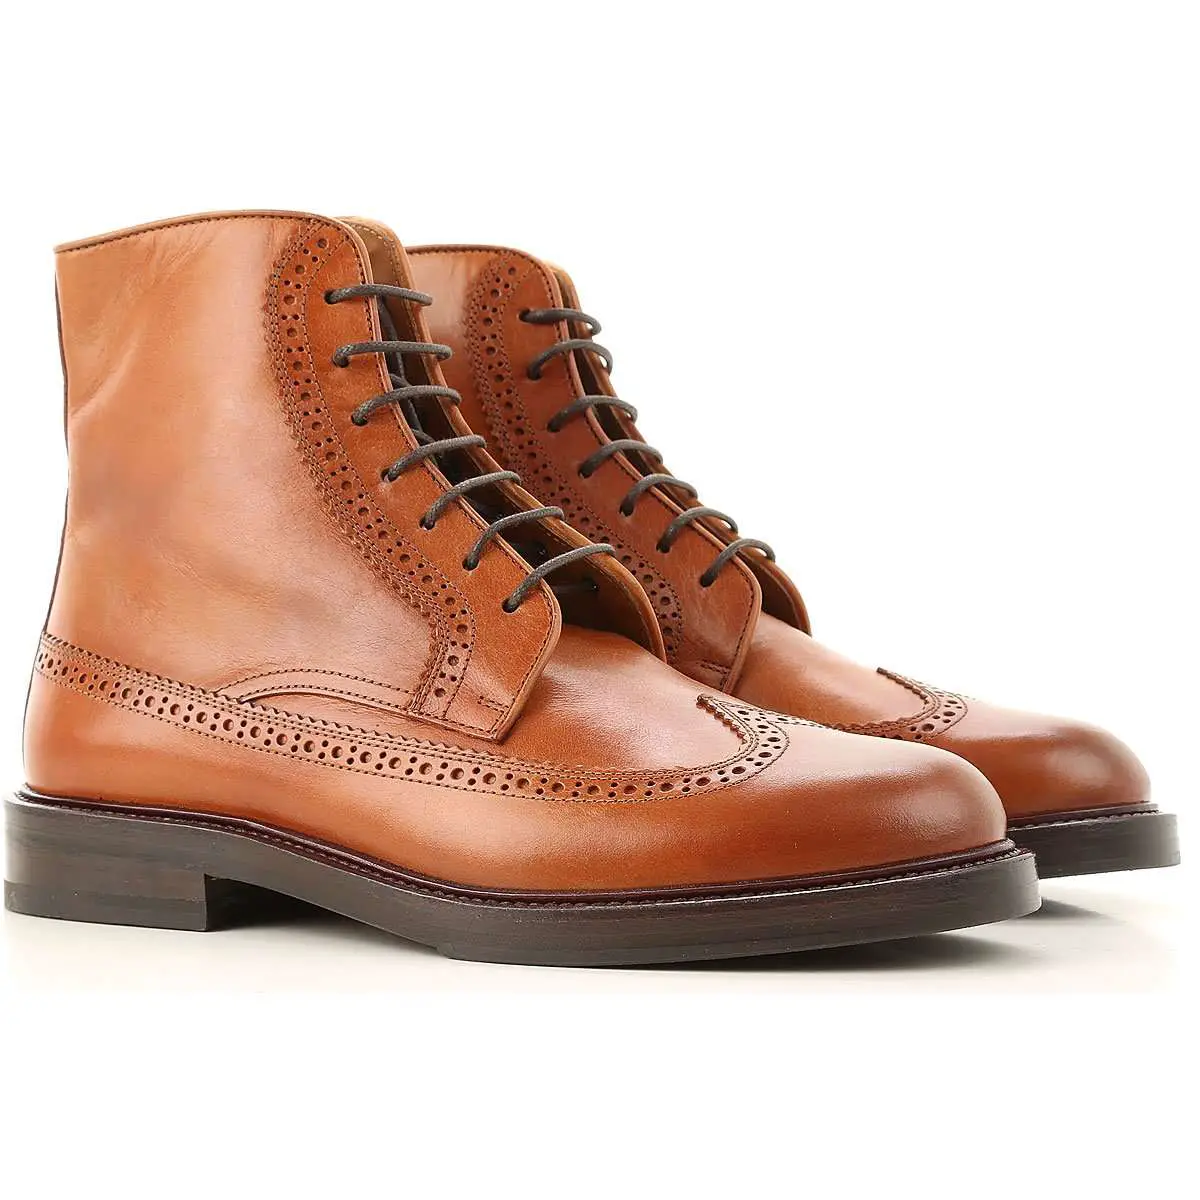 Mens Shoes Brunello Cucinelli, Style code: mzuepsu962